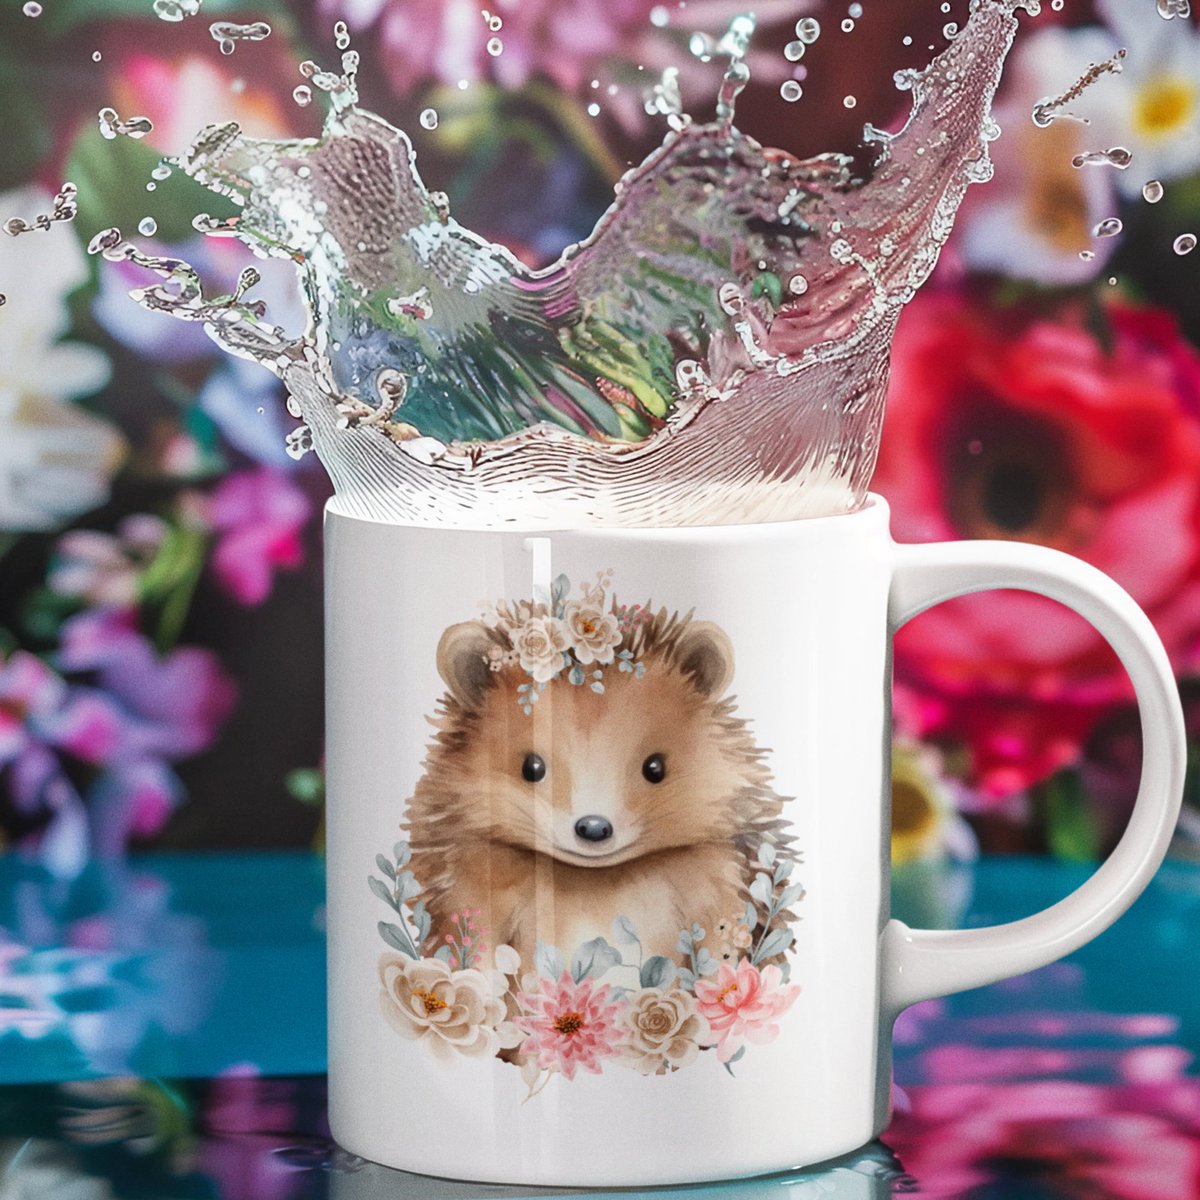 Tea or coffee in a cute hedgehog mug? Yes Please.

onthewildsidedesign.etsy.com/listing/173049…
#UKGiftHour #UKGiftAM